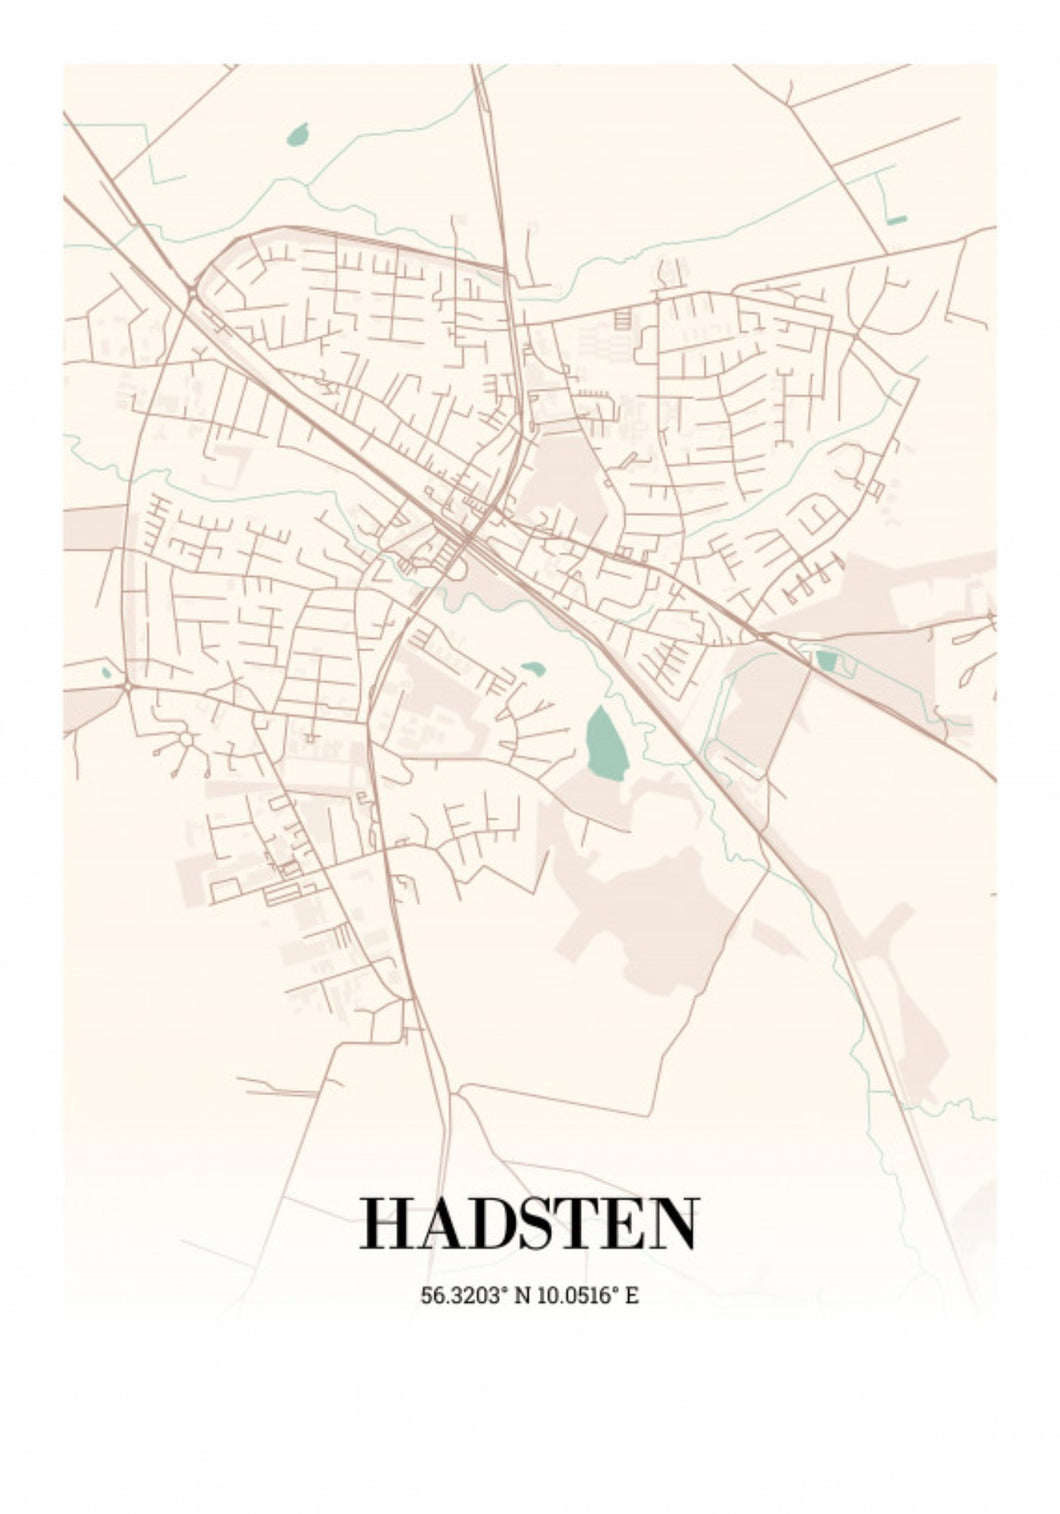 Hadsten